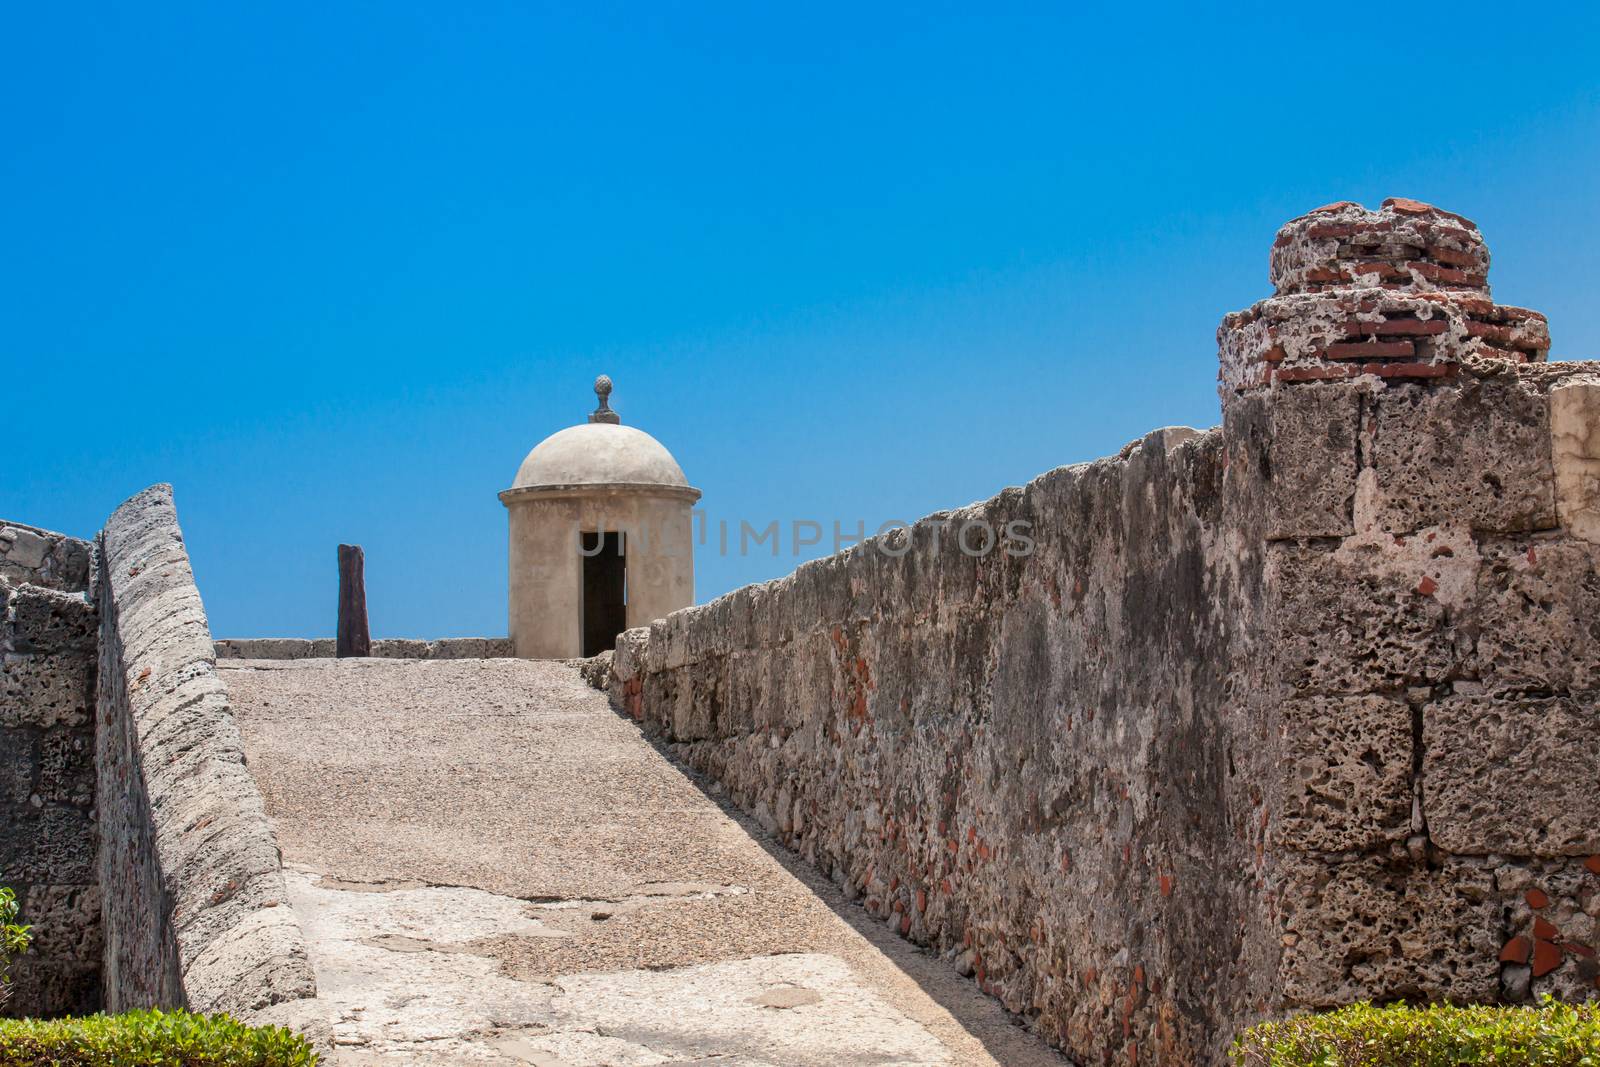 Ramp to access the wall of Cartagena de Indias